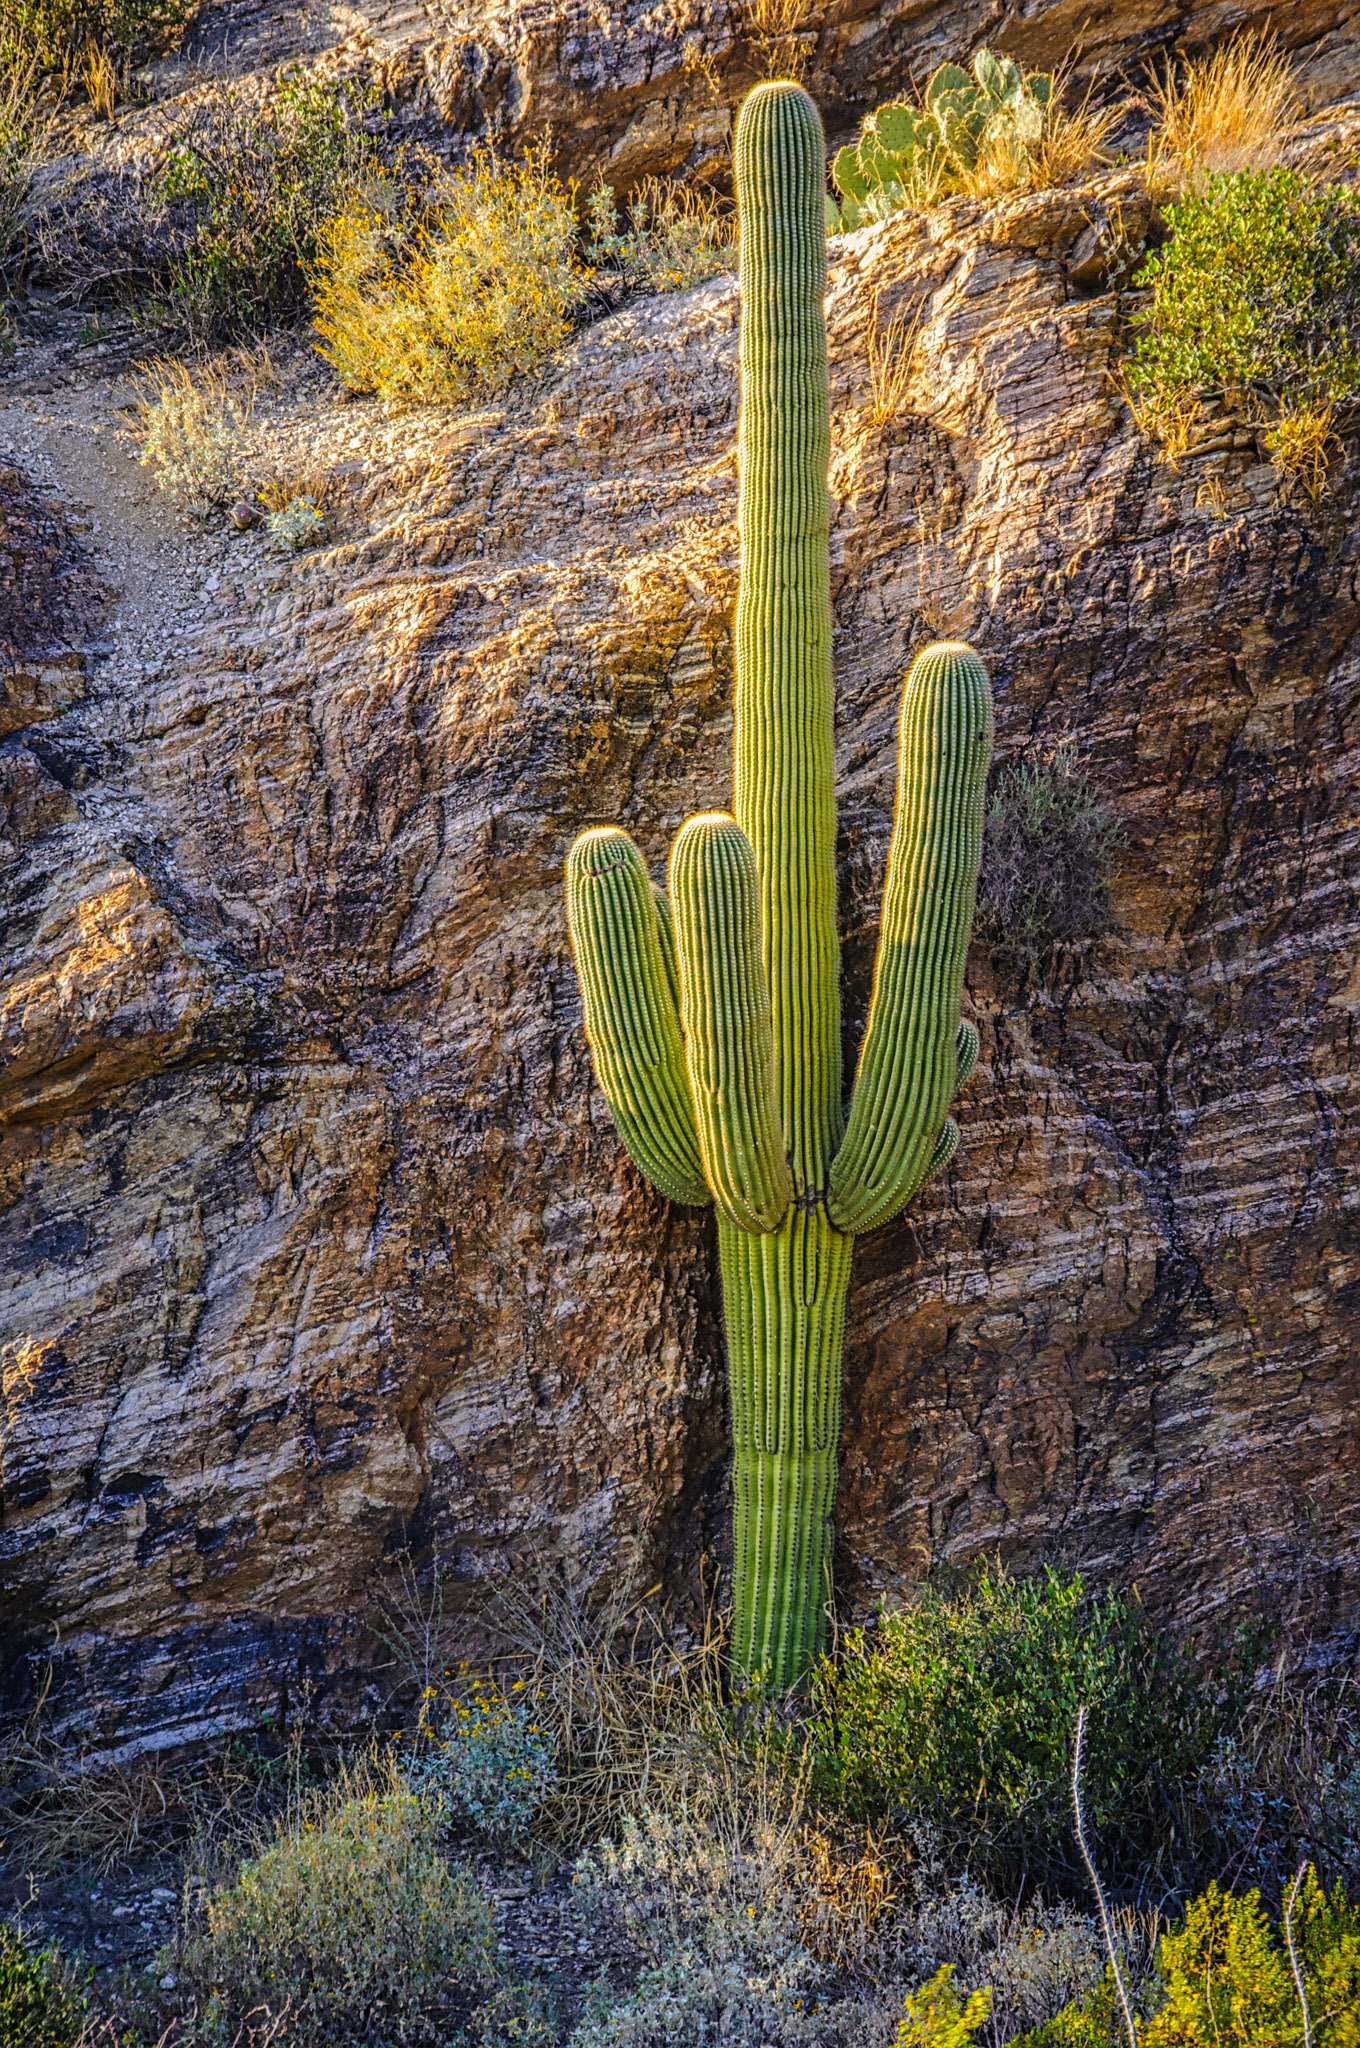 Saguaro cactus against a rock wall in Saguaro National Park near Tucson, Arizona.